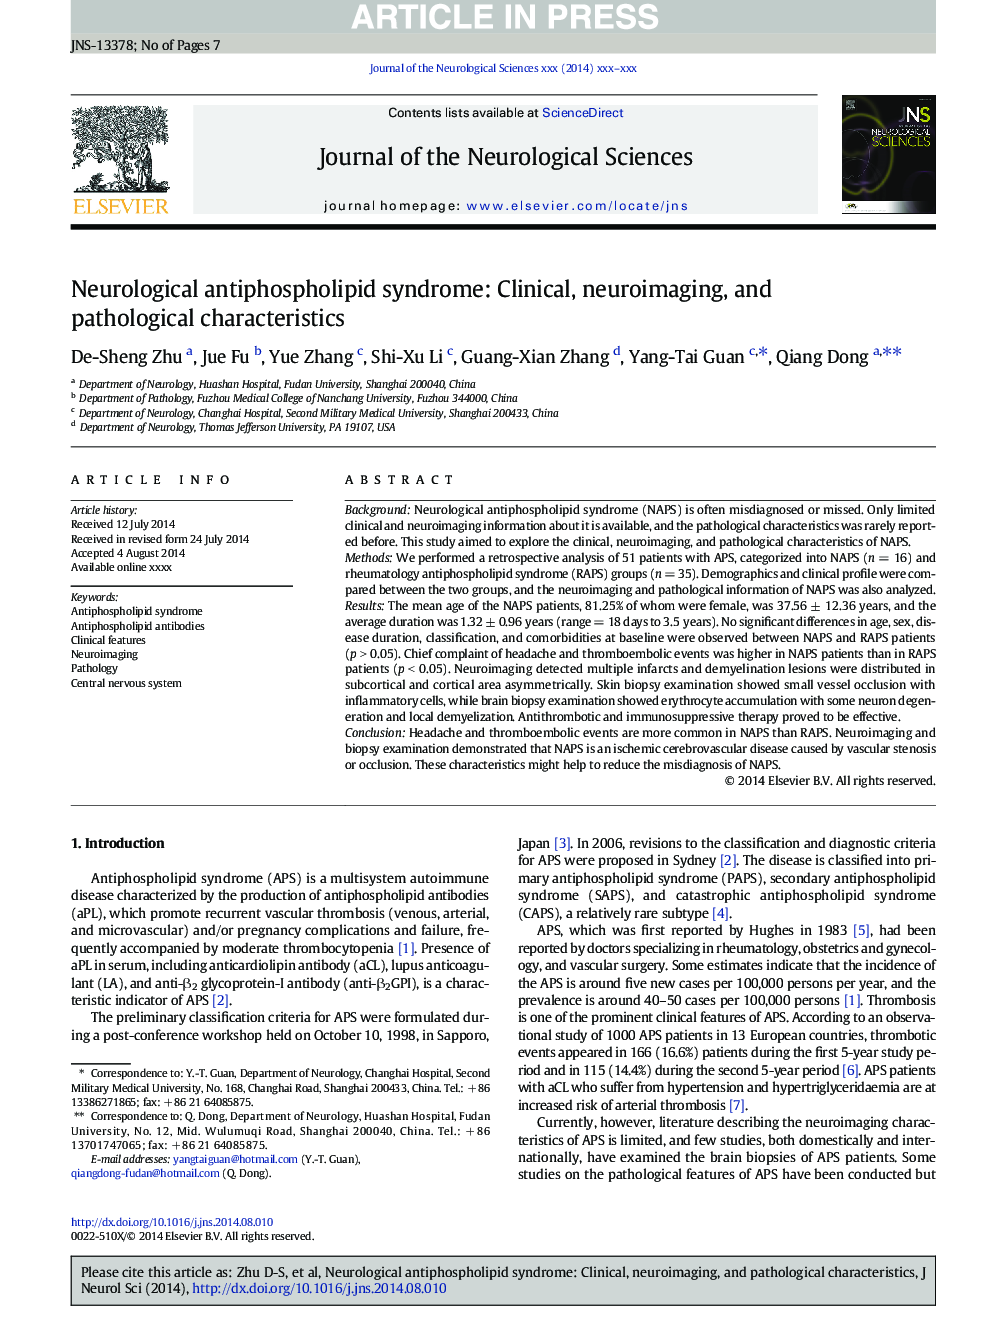 Neurological antiphospholipid syndrome: Clinical, neuroimaging, and pathological characteristics